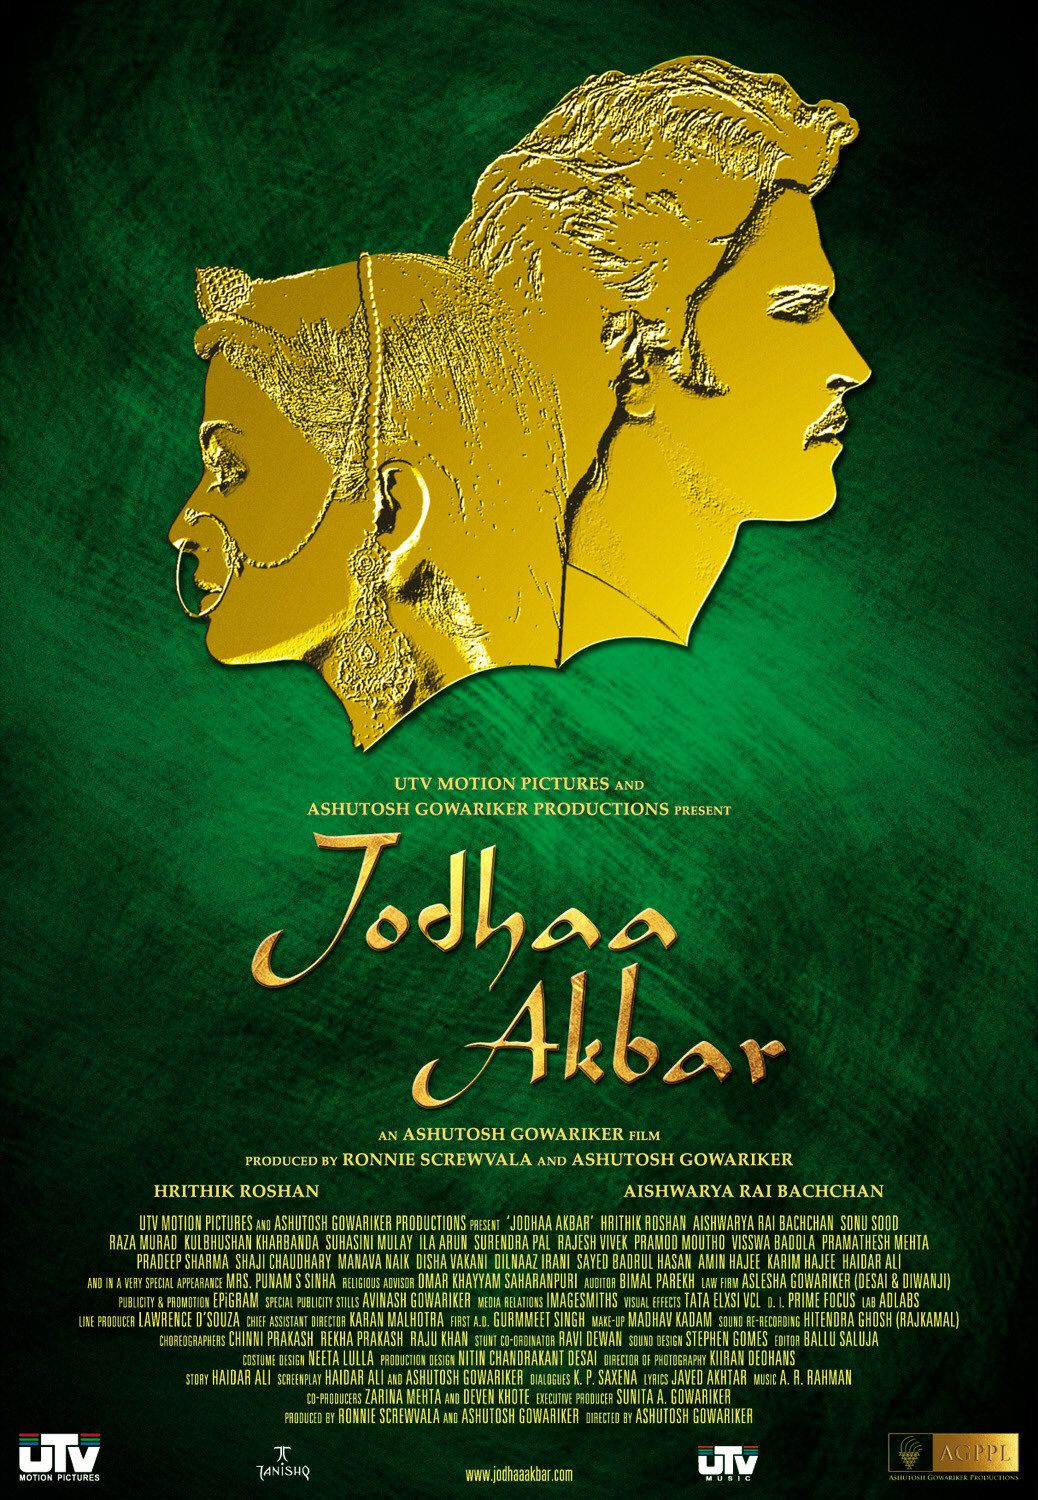 Return to Main Page for Jodhaa Akbar Posters